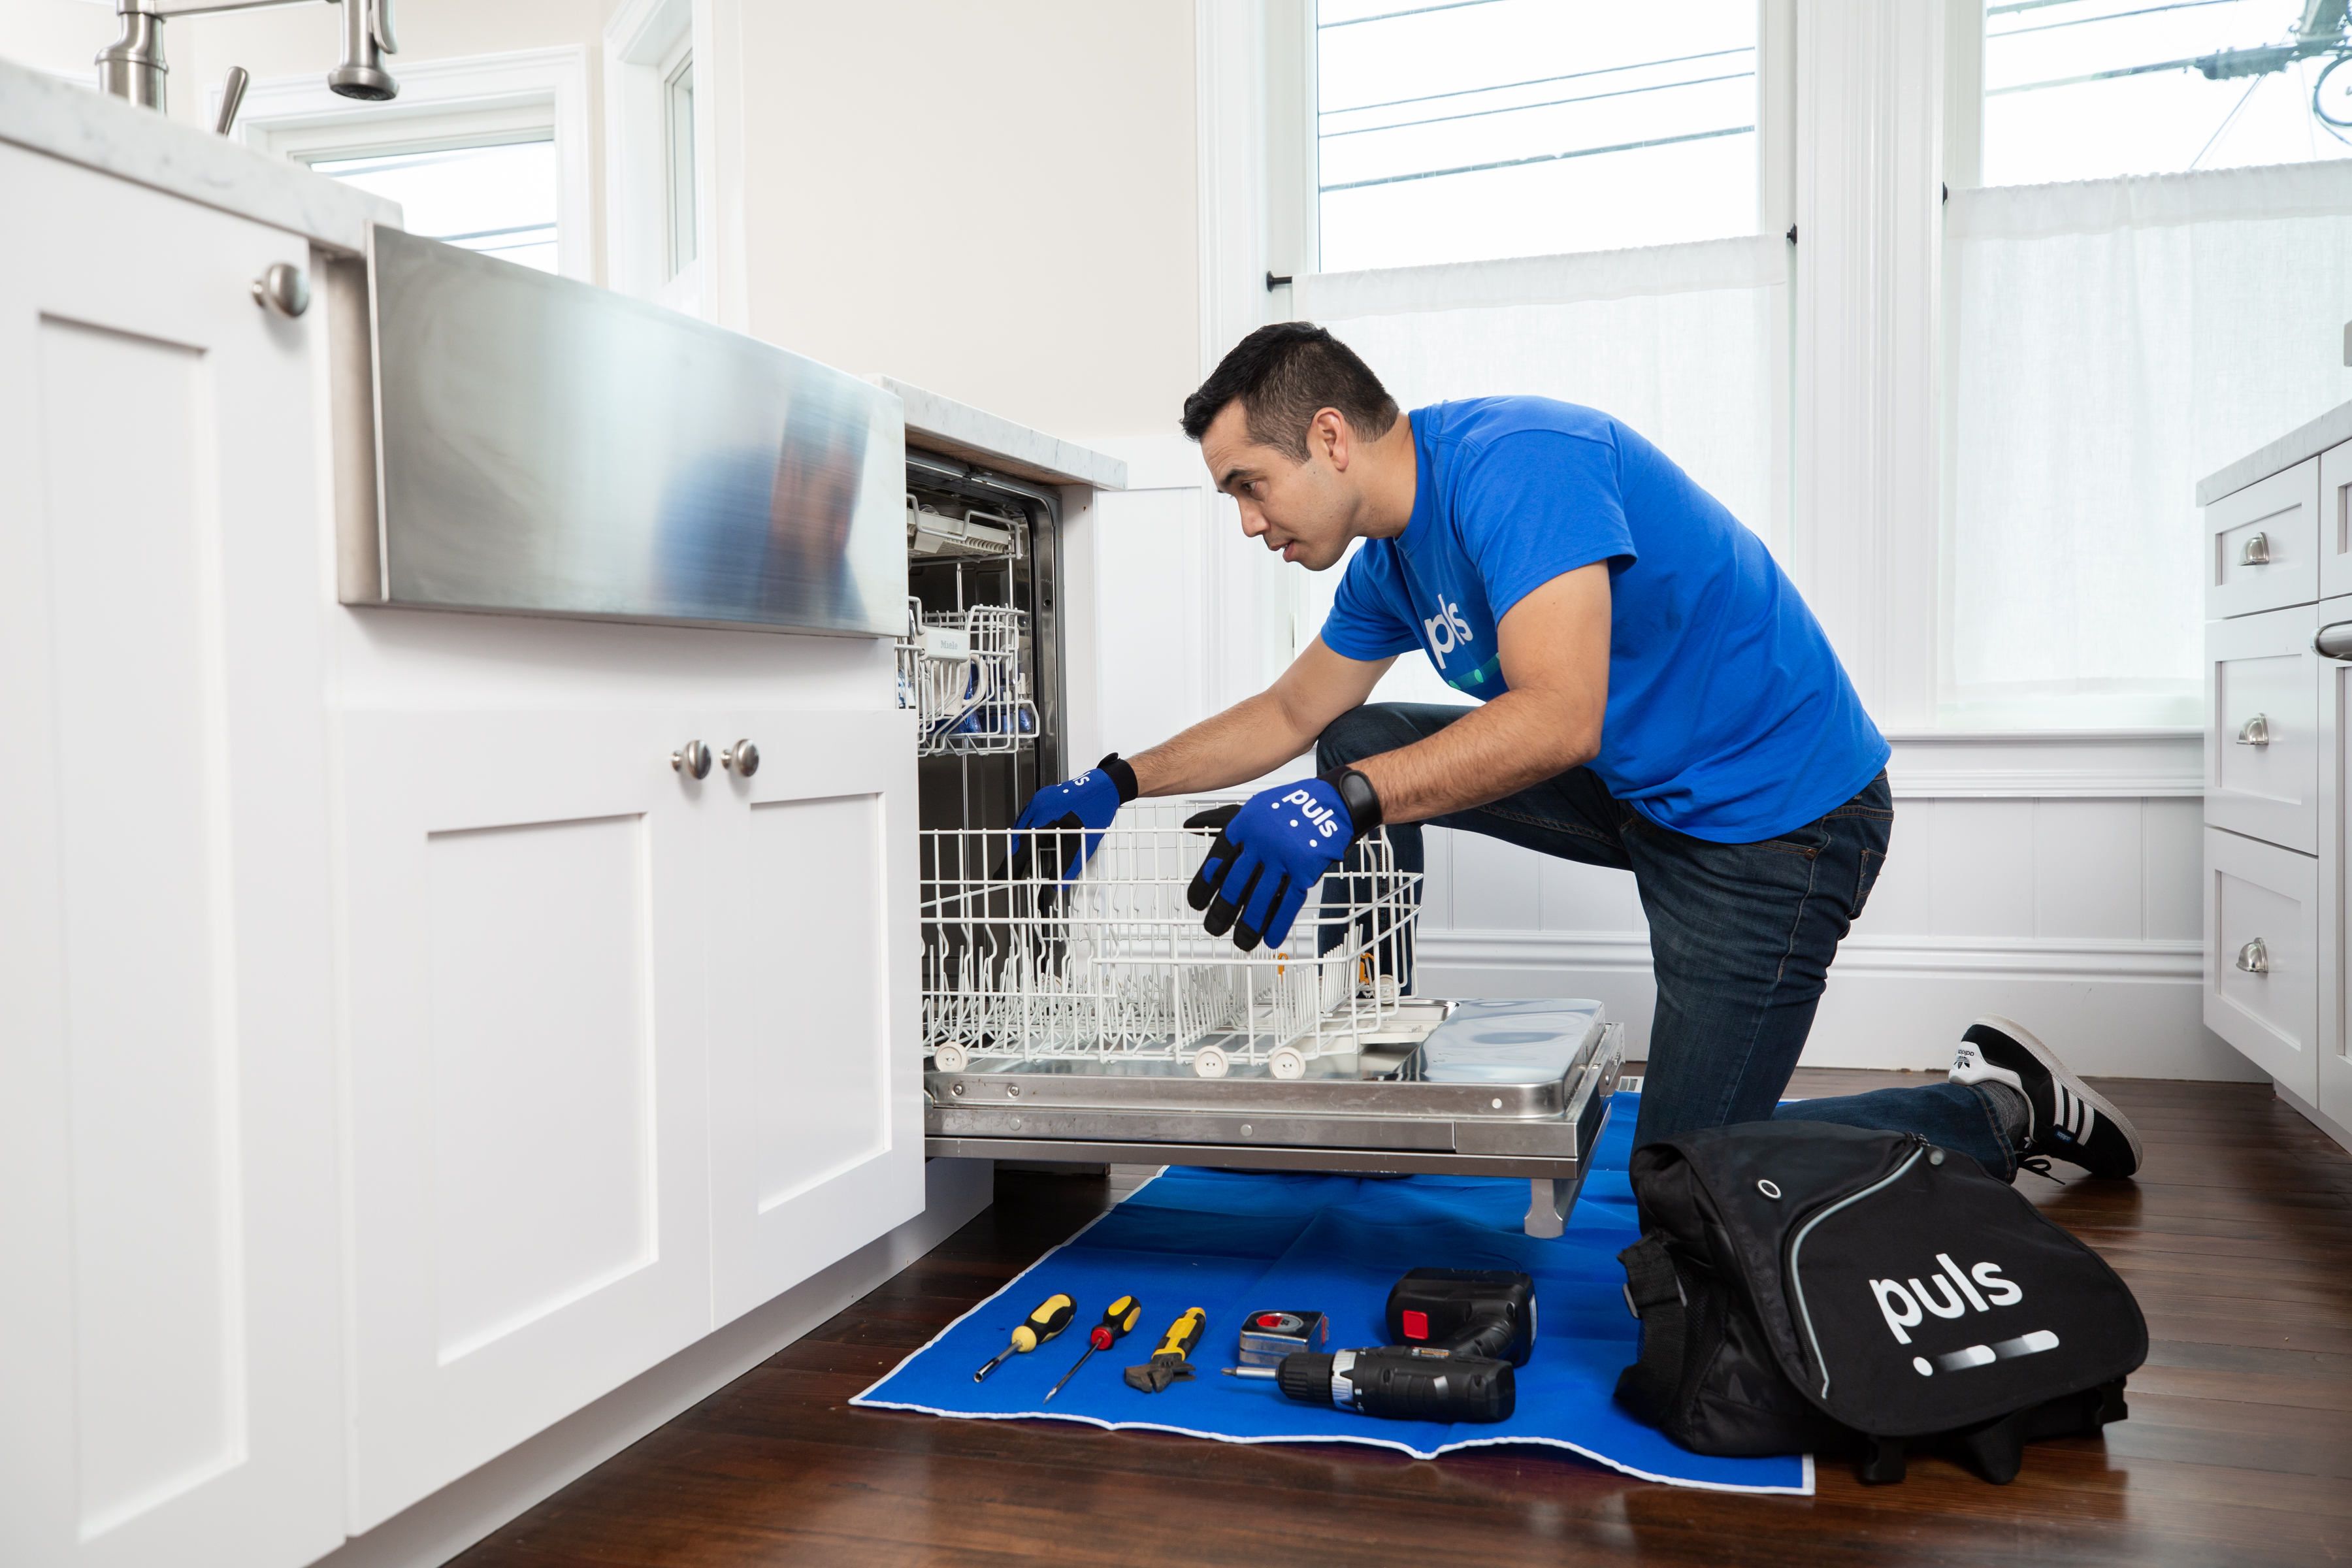 Dishwasher Repair Cost: Average Price to Fix a Dishwasher